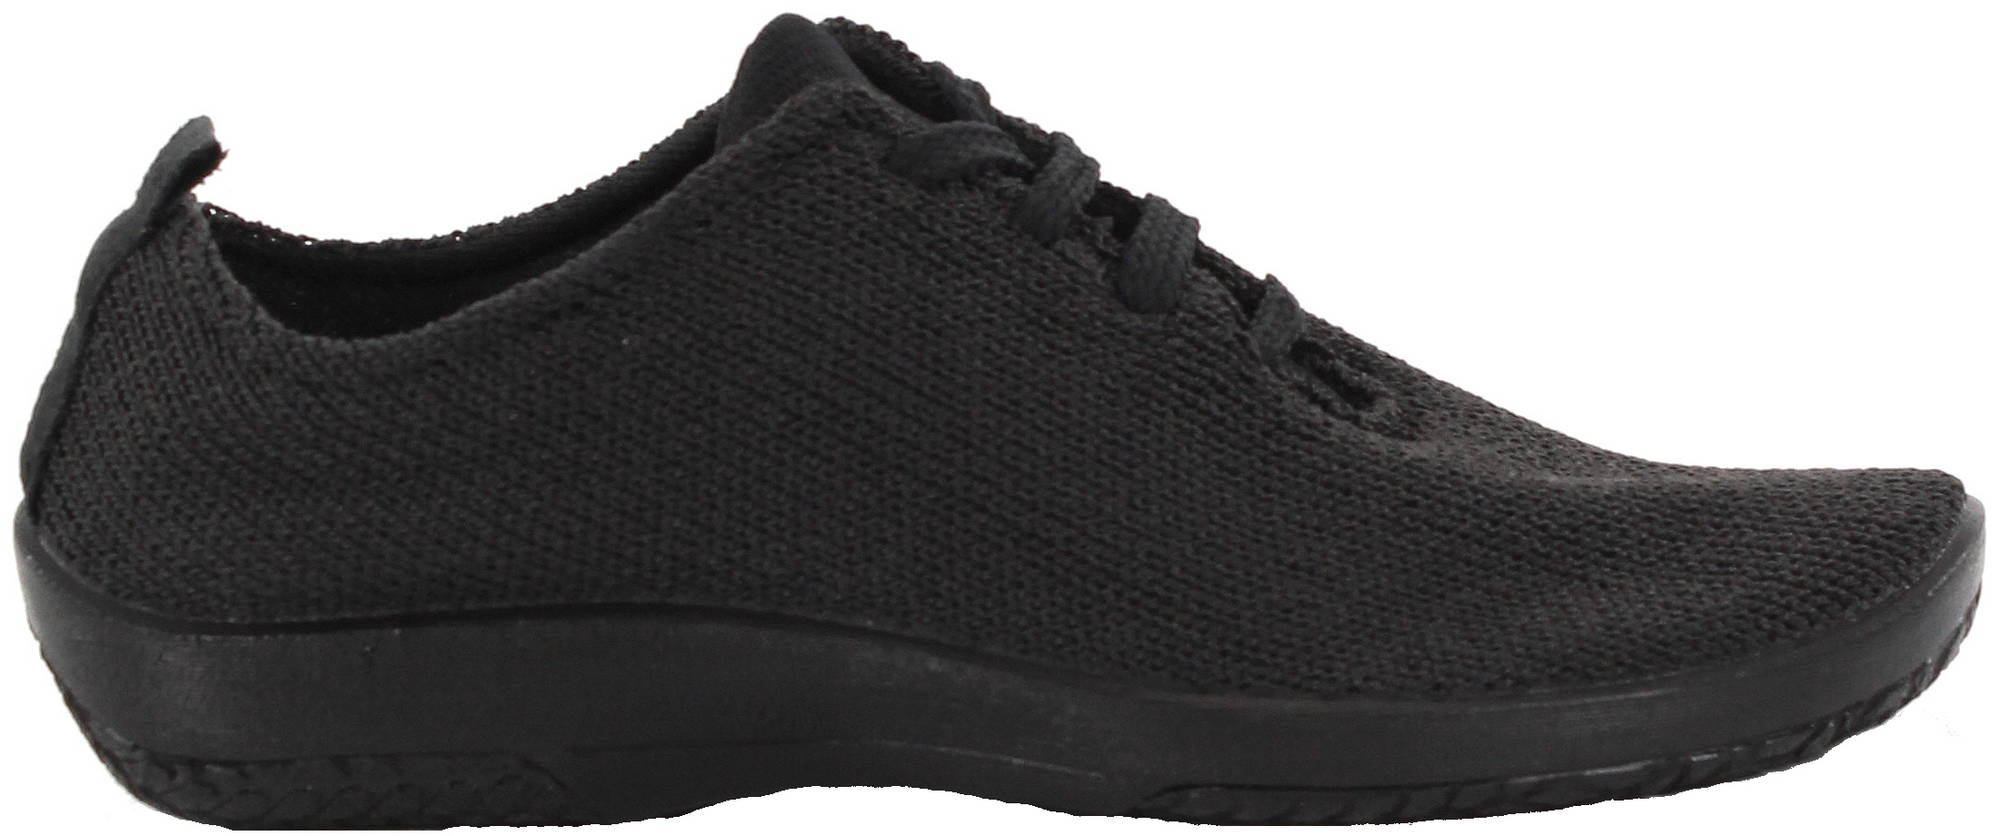 Arcopedico Walking Shoes 1151 LS black - Stilettoshop.eu webstore